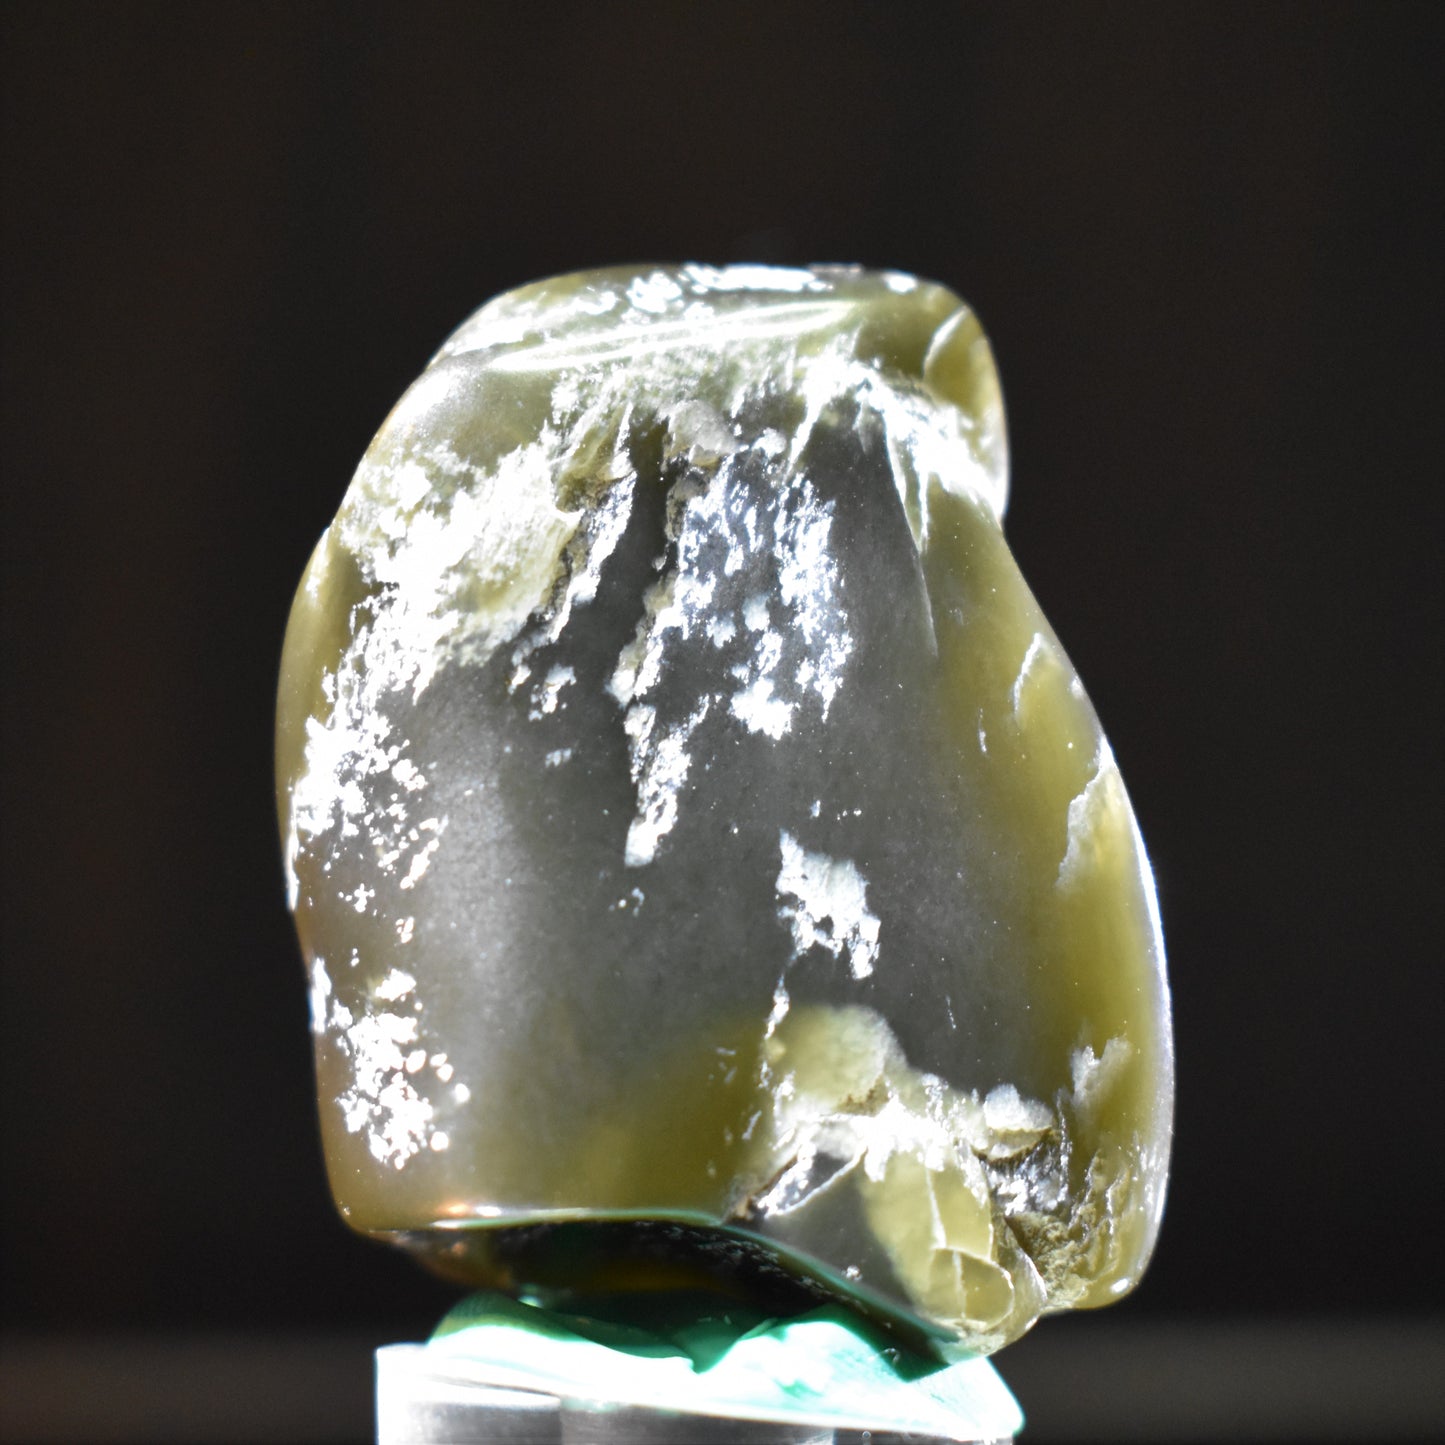 Jade Tumbled Gem / Carving Stone 2026